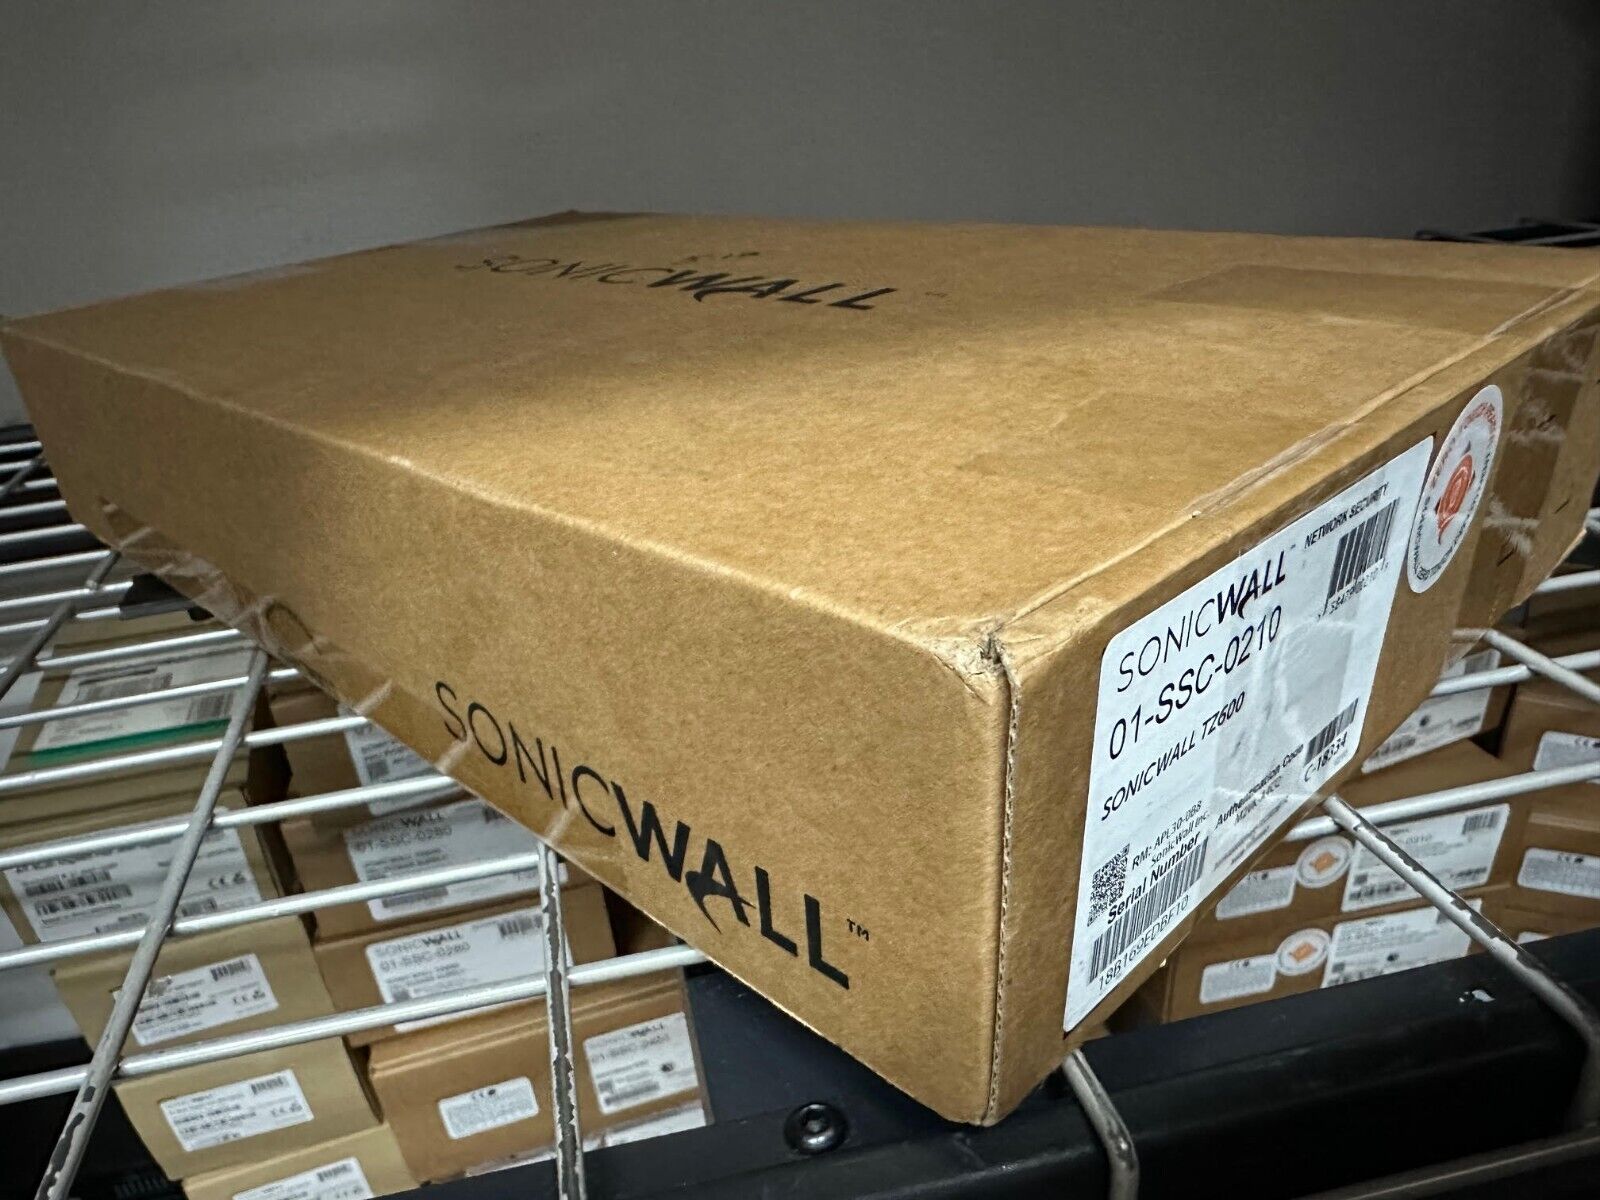 SonicWall TZ600 Firewall | 01-SSC-0210 | New Sealed Box